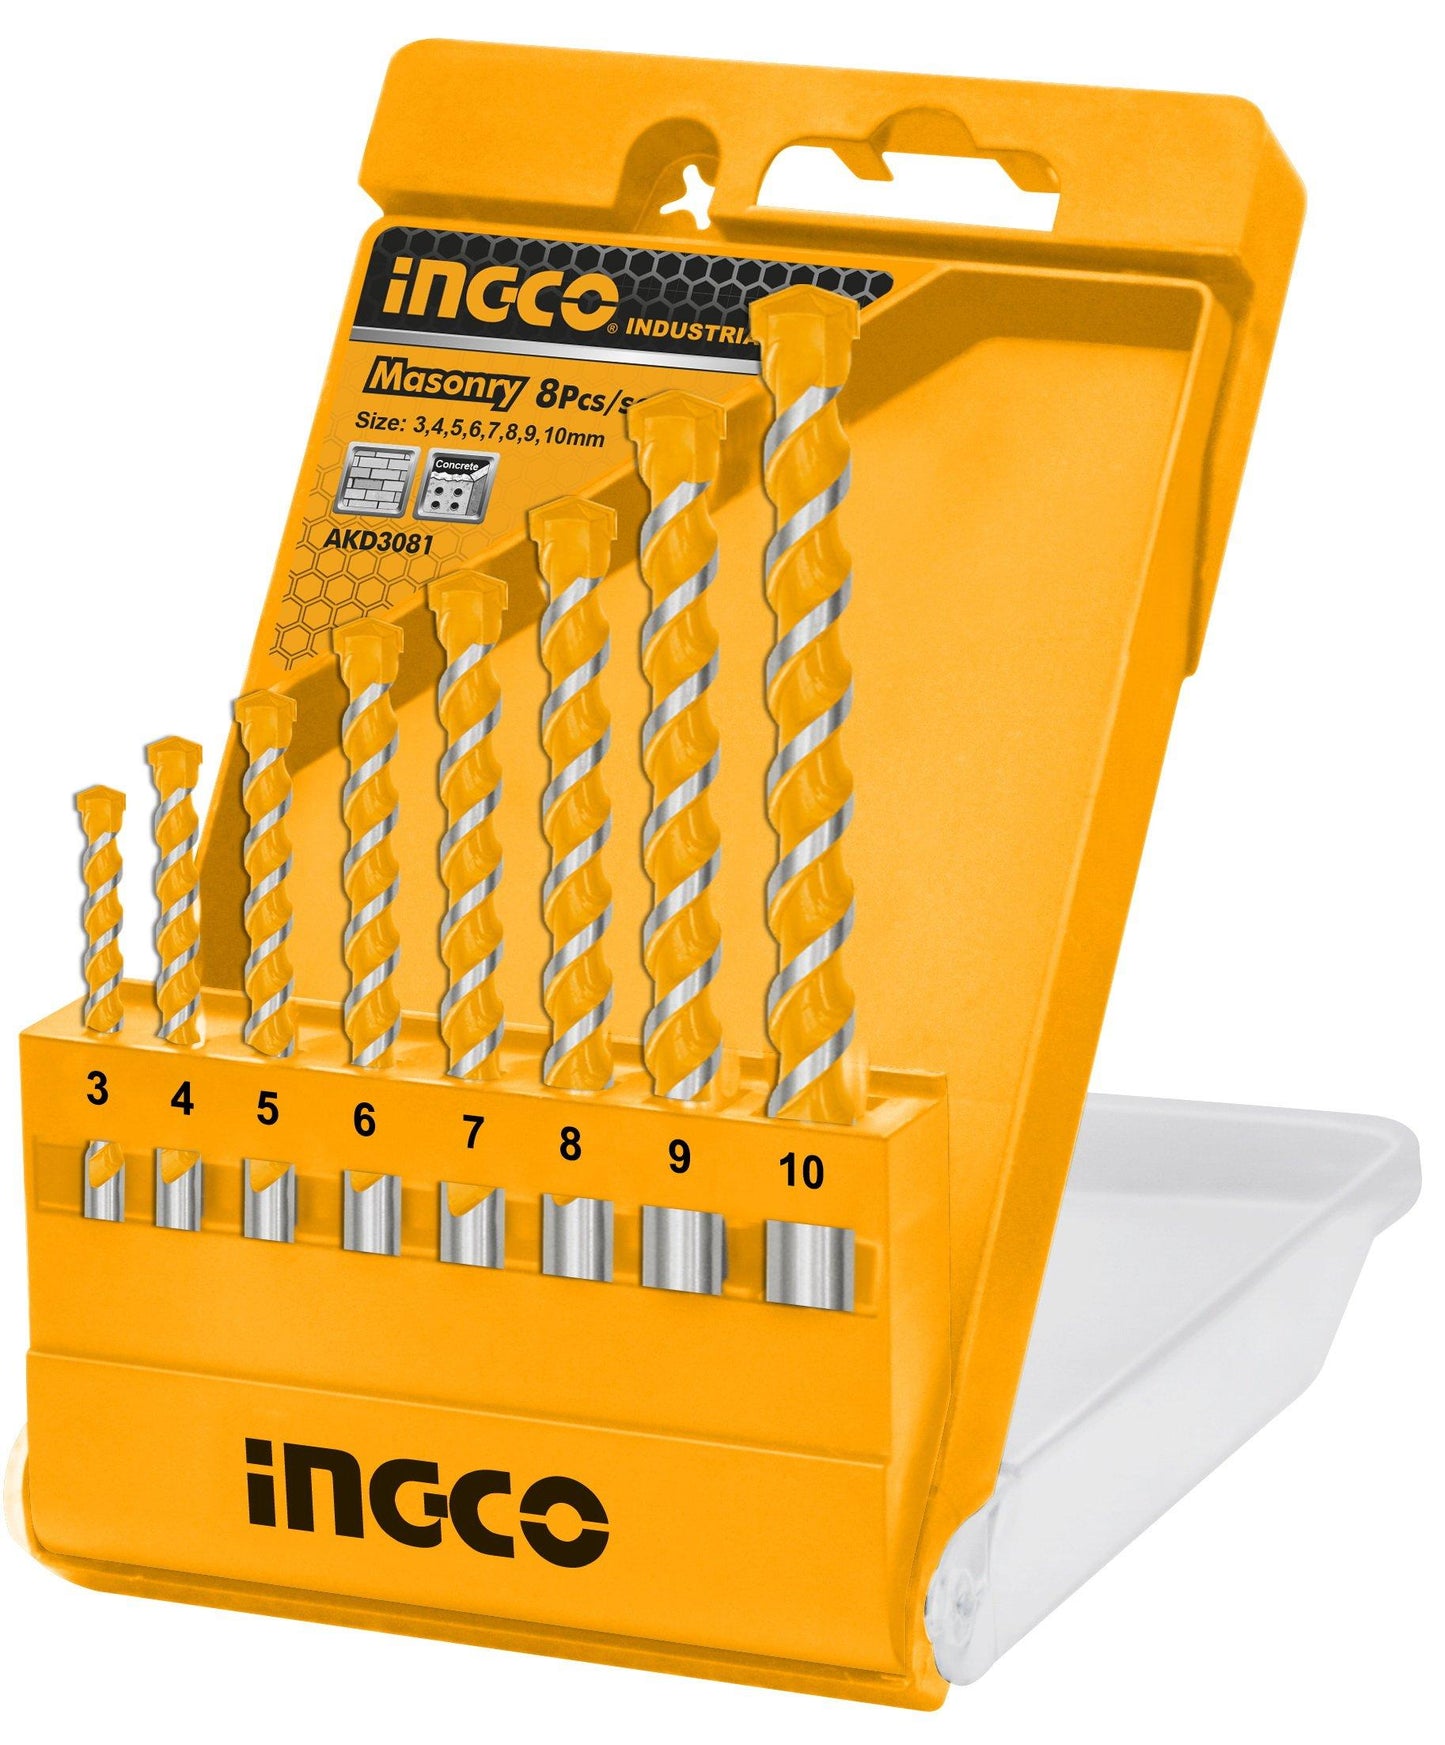 INGCO Multi-Function Drill Bits Price in Pakistan